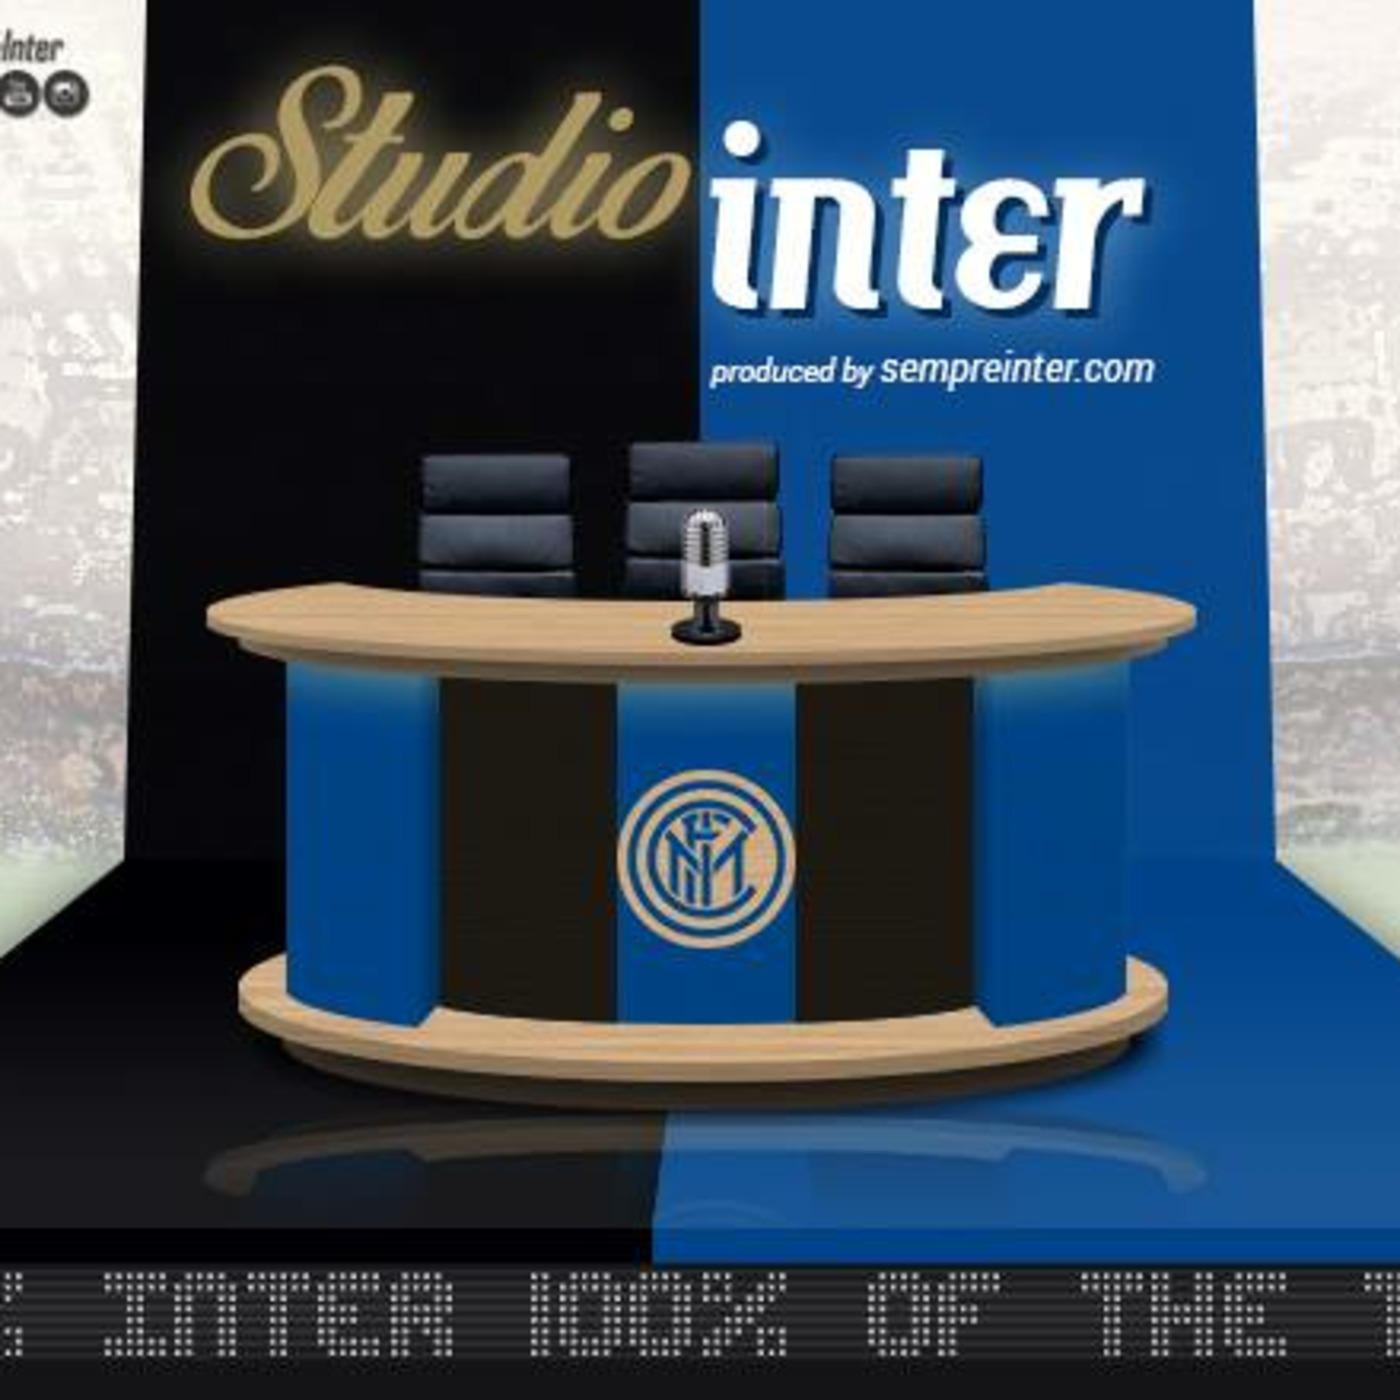 Studio Inter #69: ”Chievo would’ve won if De Boer was still in charge”